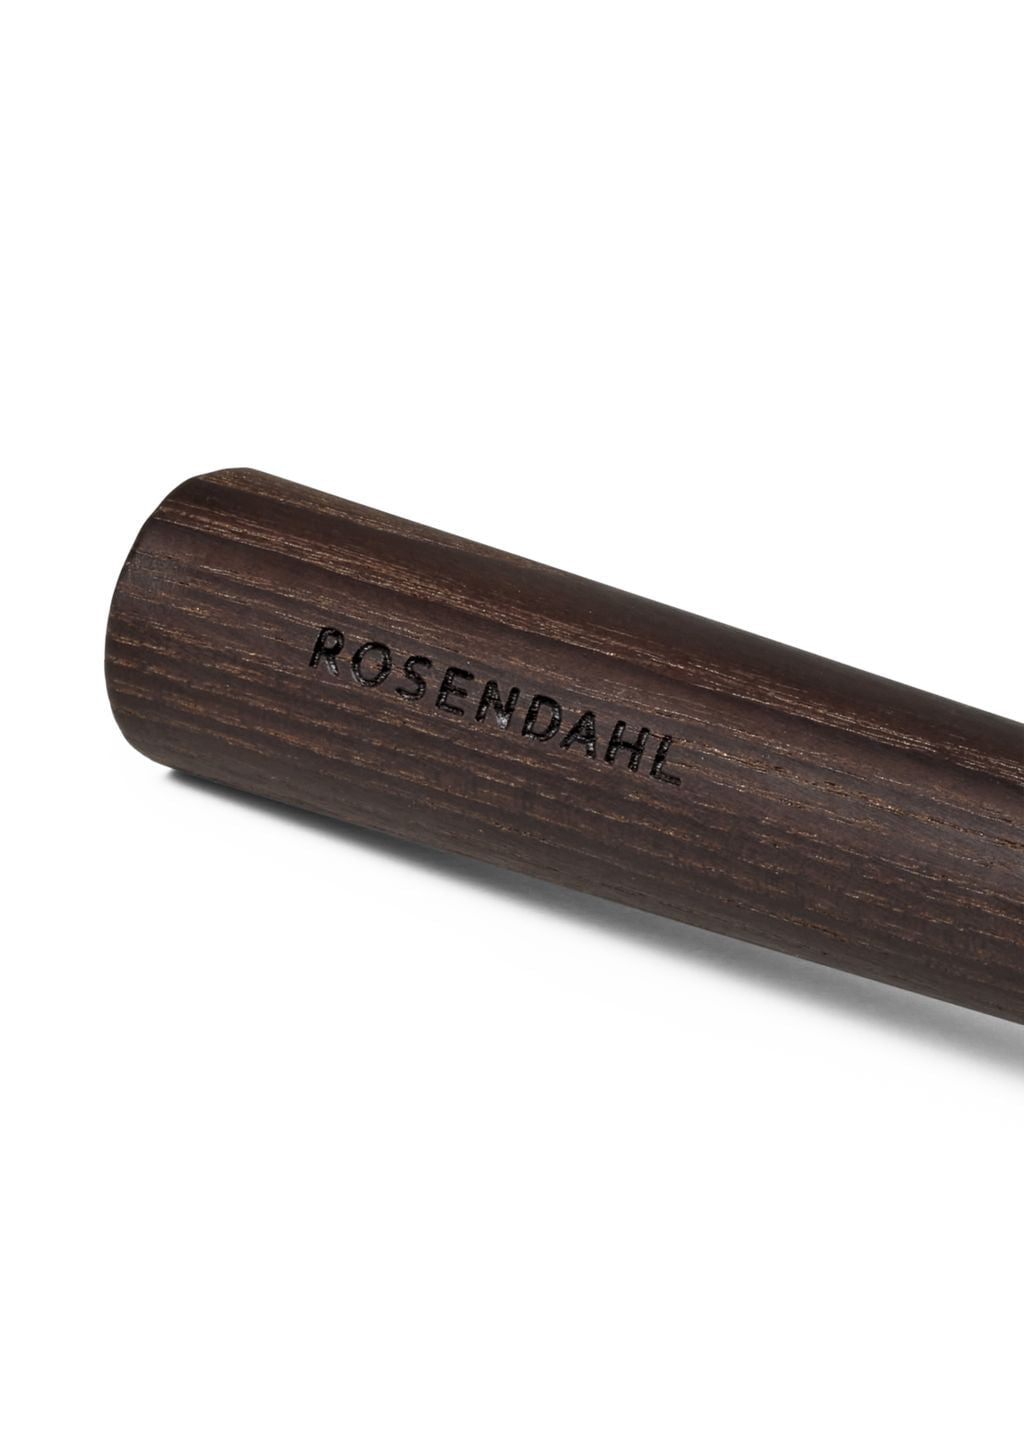 Rosendahl Rå Whisk, Thermo Ash/Gun Metallic